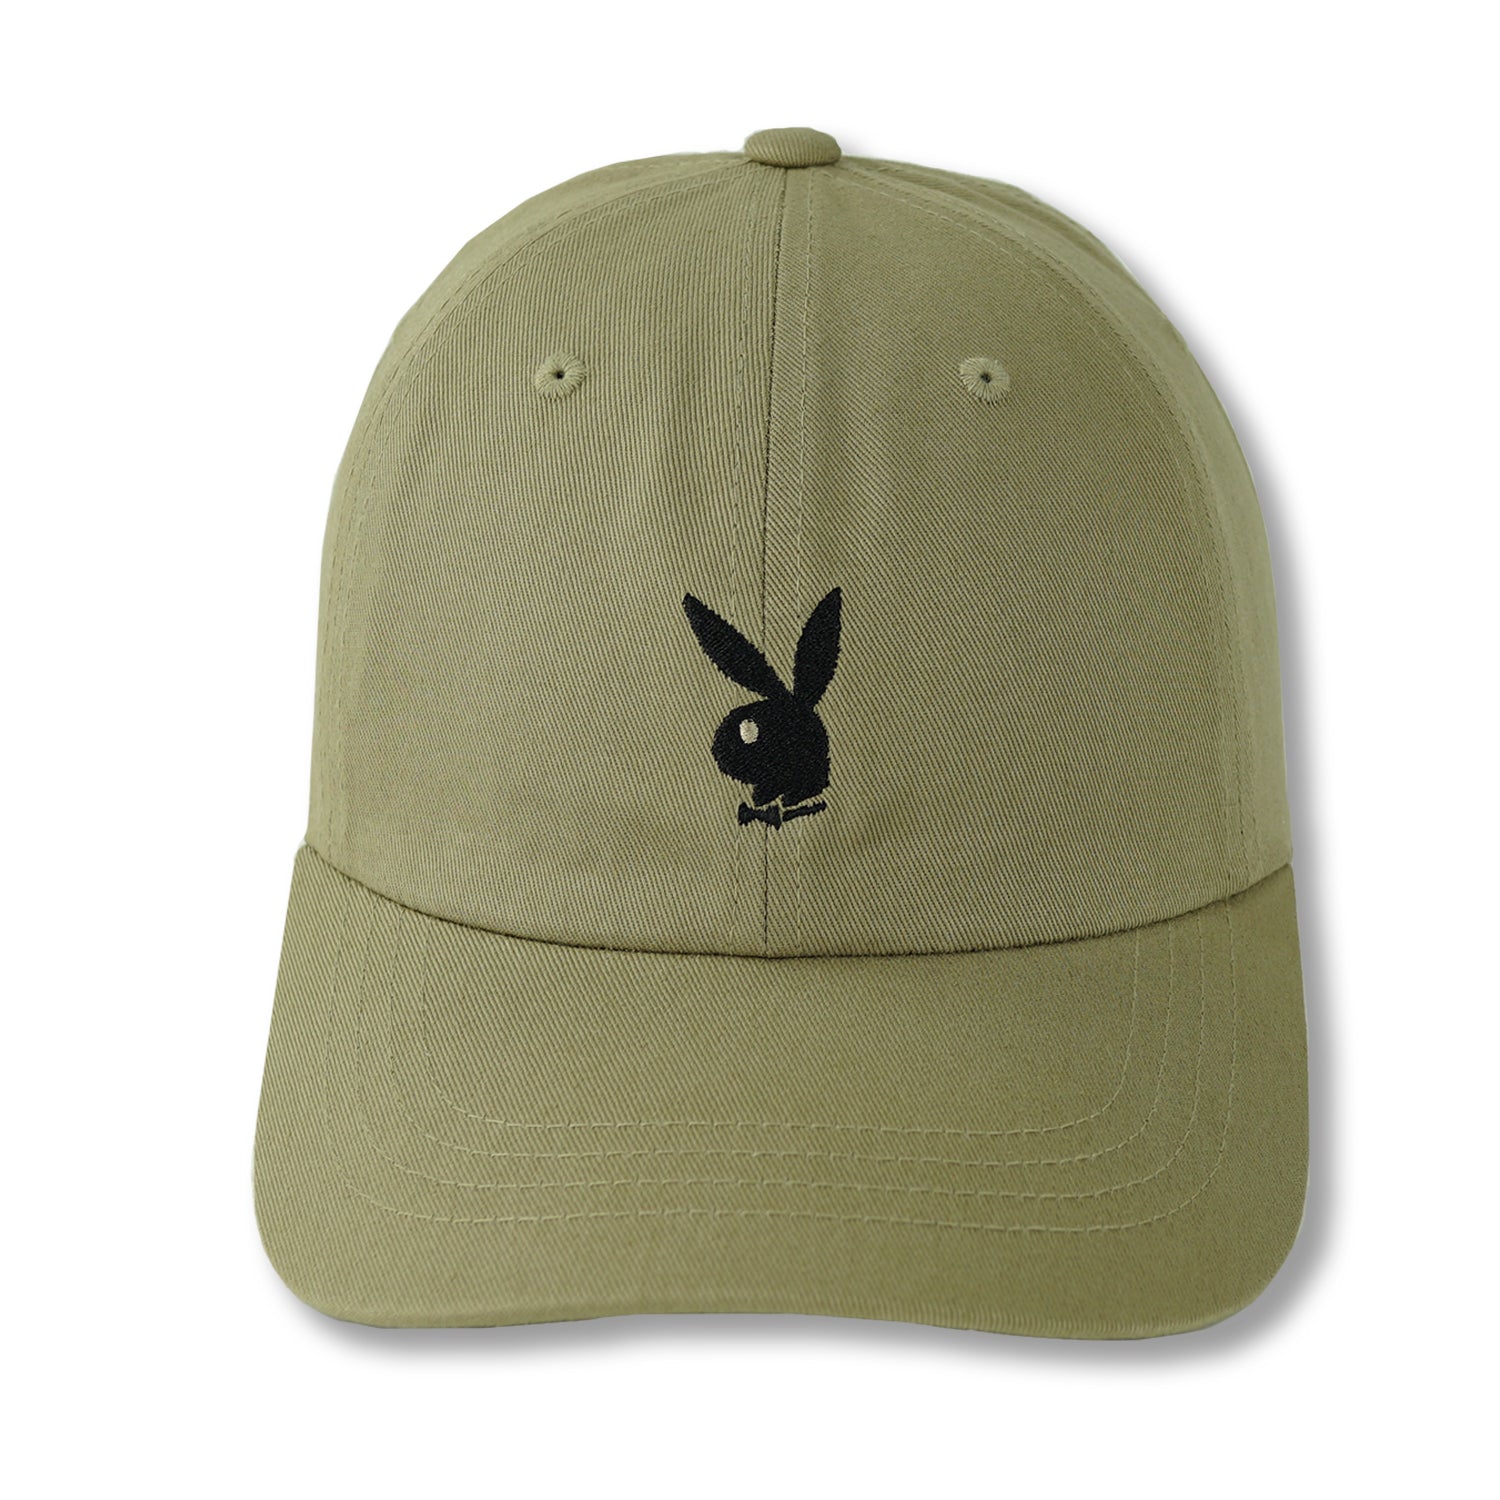 Adjustable Buckle Strap Hat + Ultimate Comfort | Rabbit Head Logo Hat Khaki